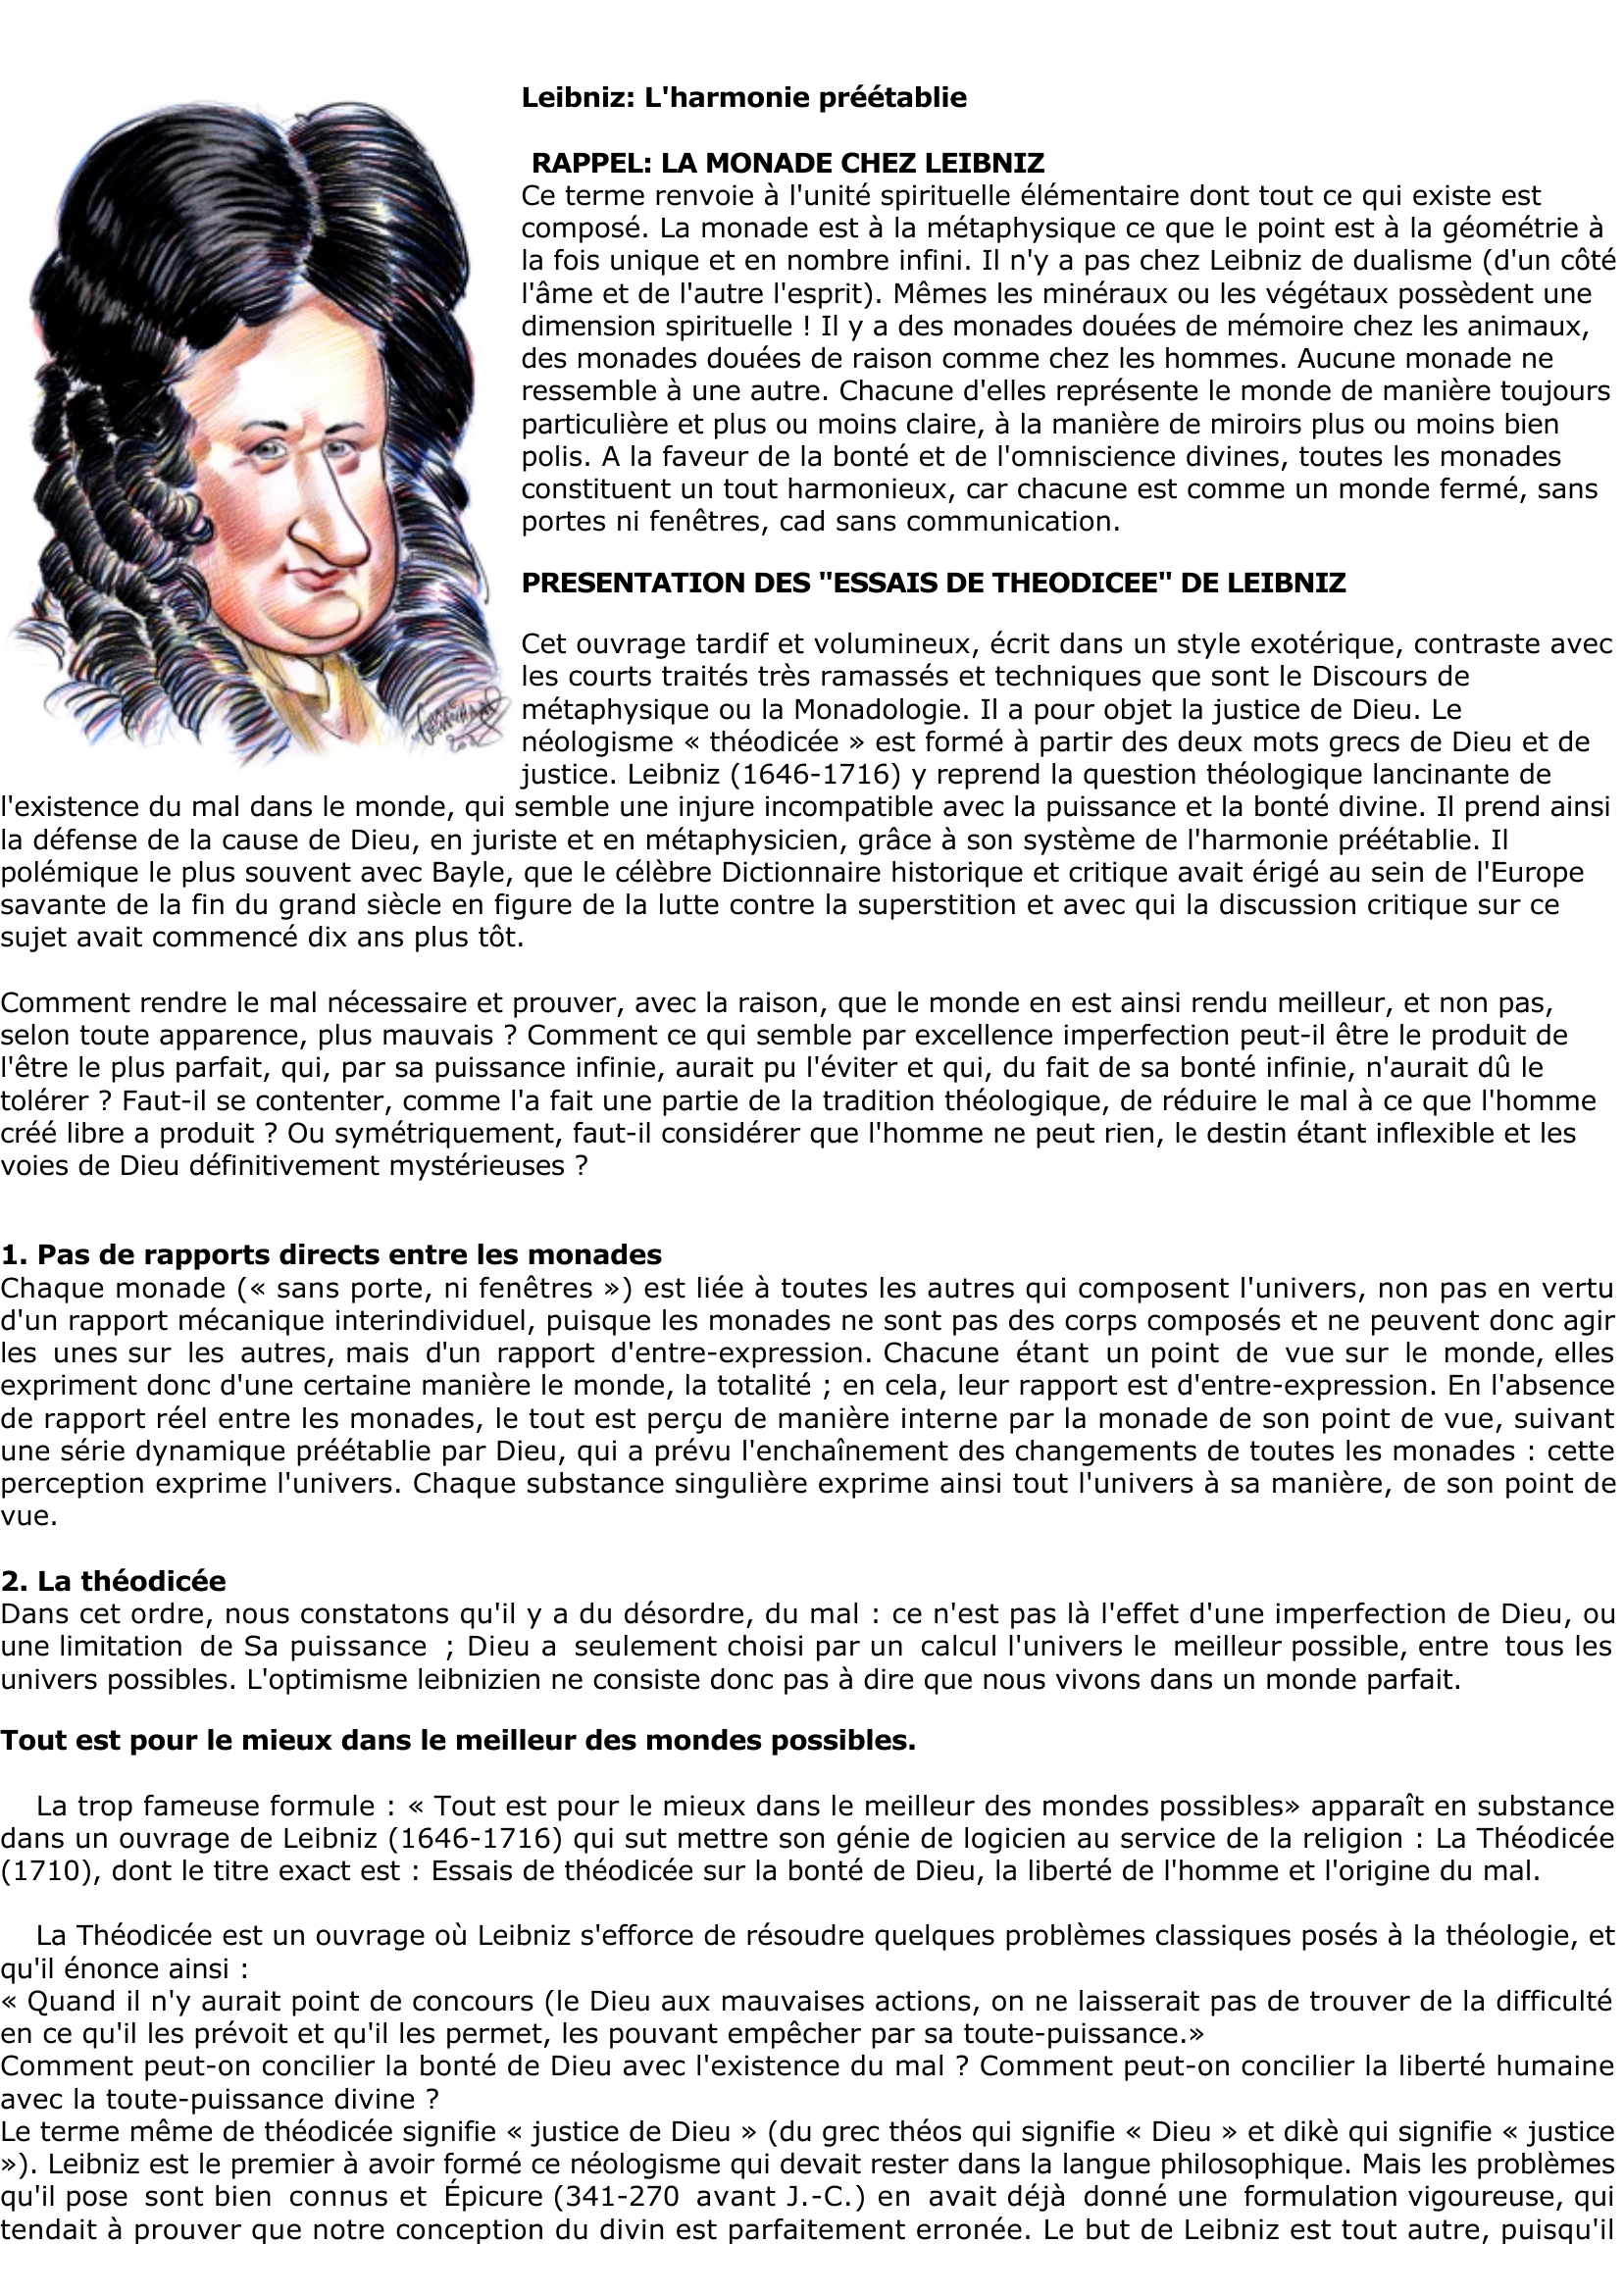 Prévisualisation du document Leibniz: L'harmonie préétablie